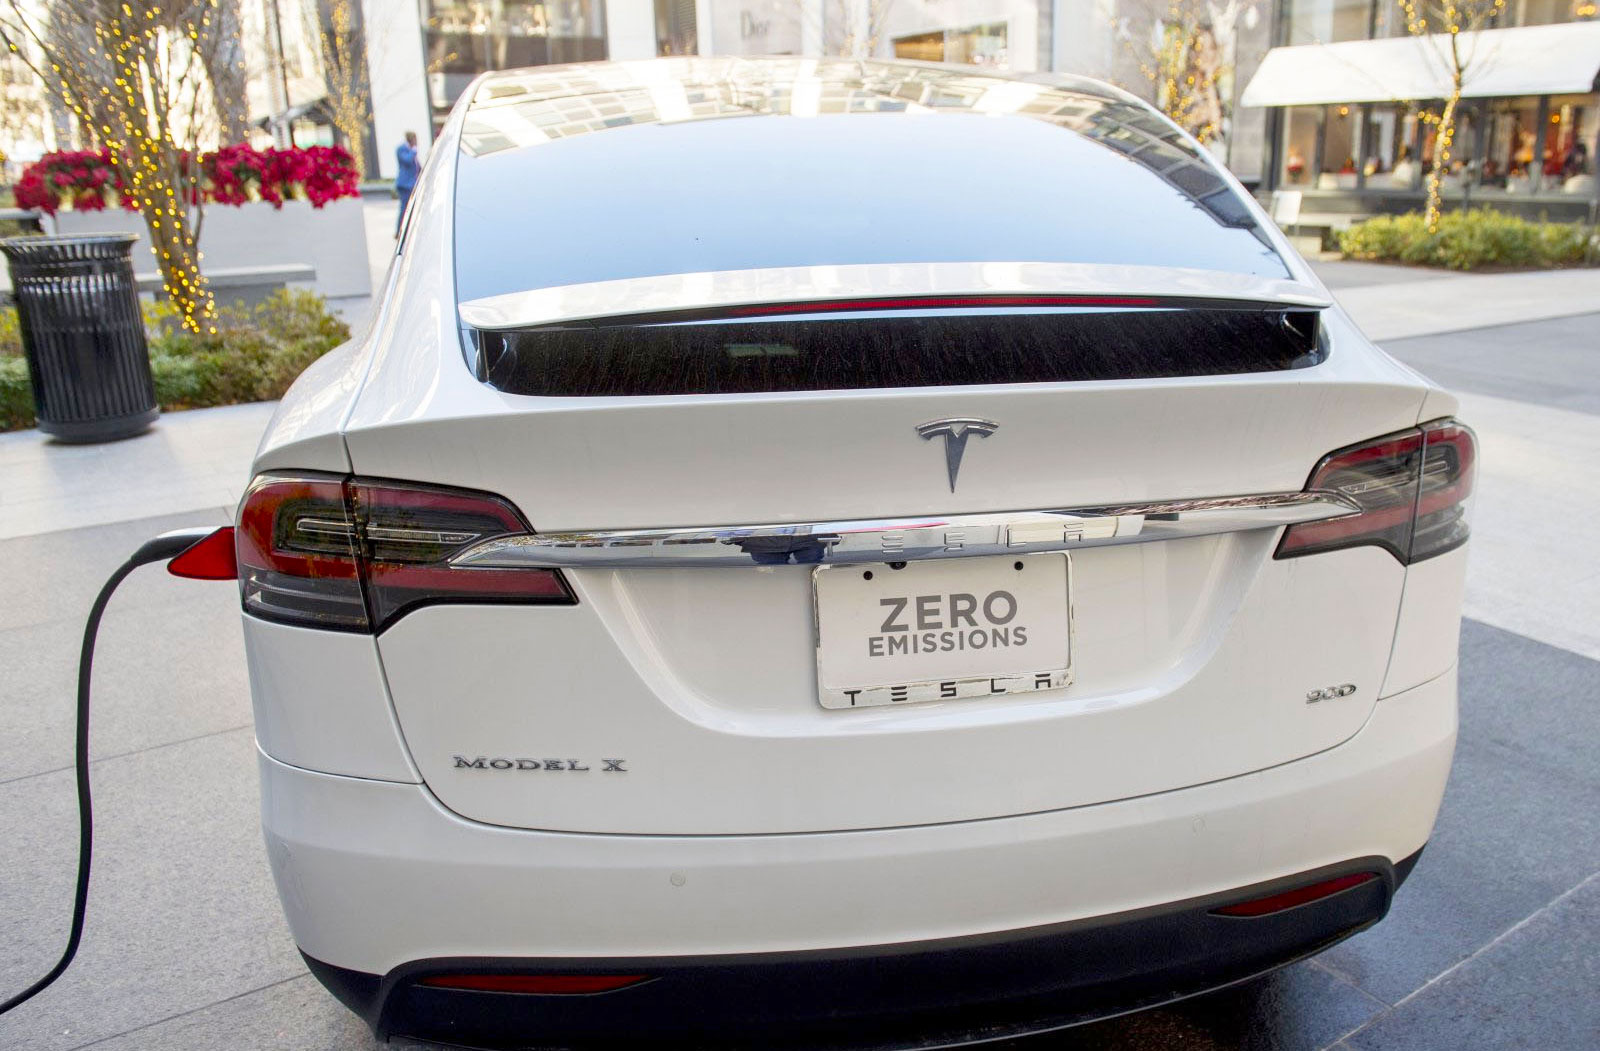 Tesla S Latest 100d Models Focus On Range Not Power Engadget